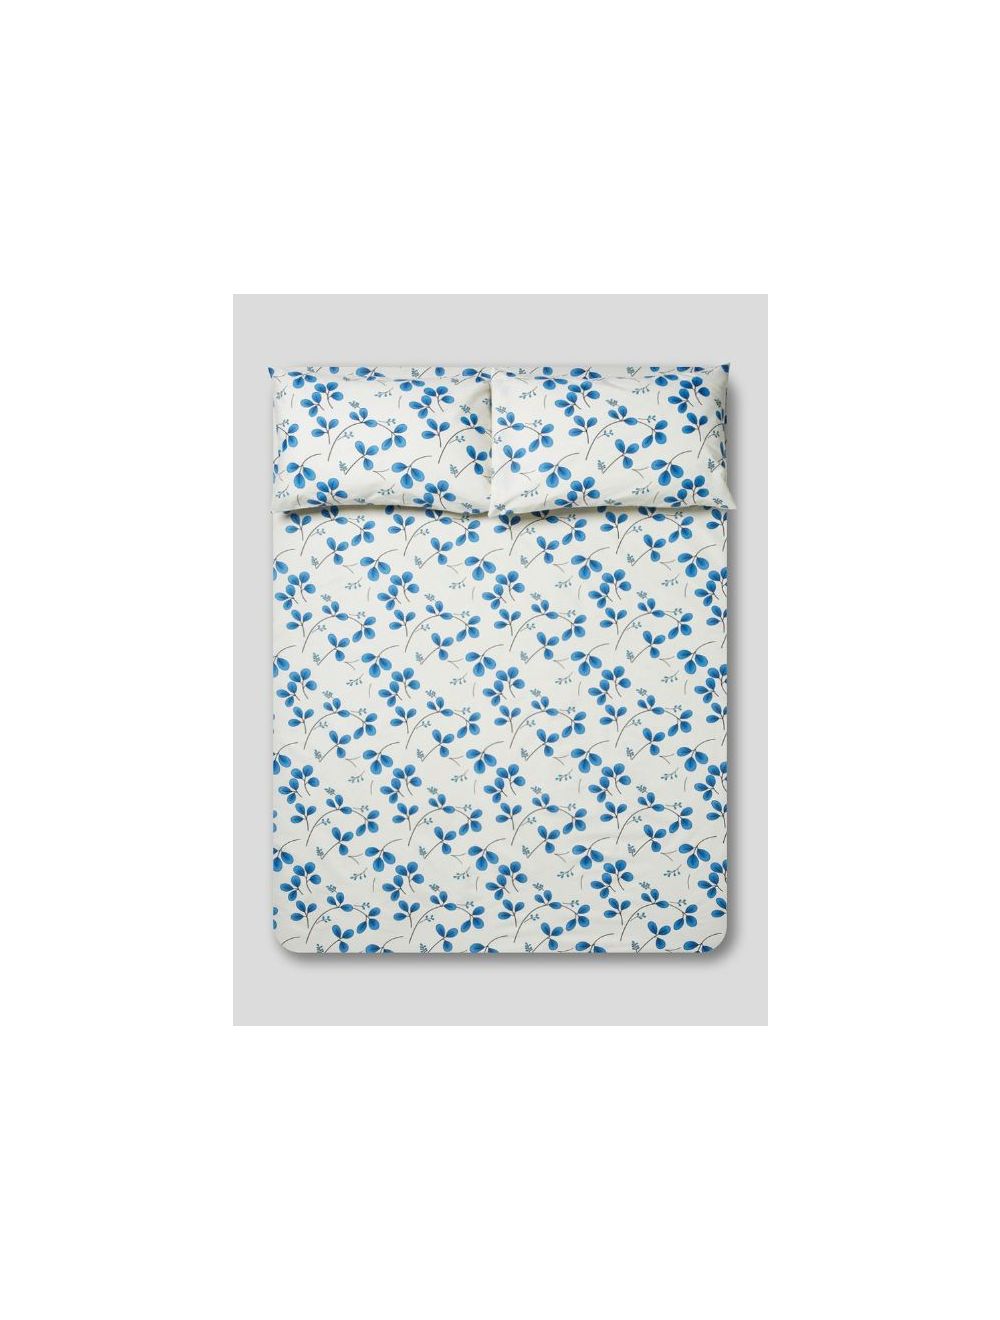 Rishahome 3- Piece Printed 180 TC Cotton Bedsheet Set Queen Size, Premium Collection ( 1 Bedsheet + 2 Pillow Cases)Blue Leaves-4BSPCQ1024